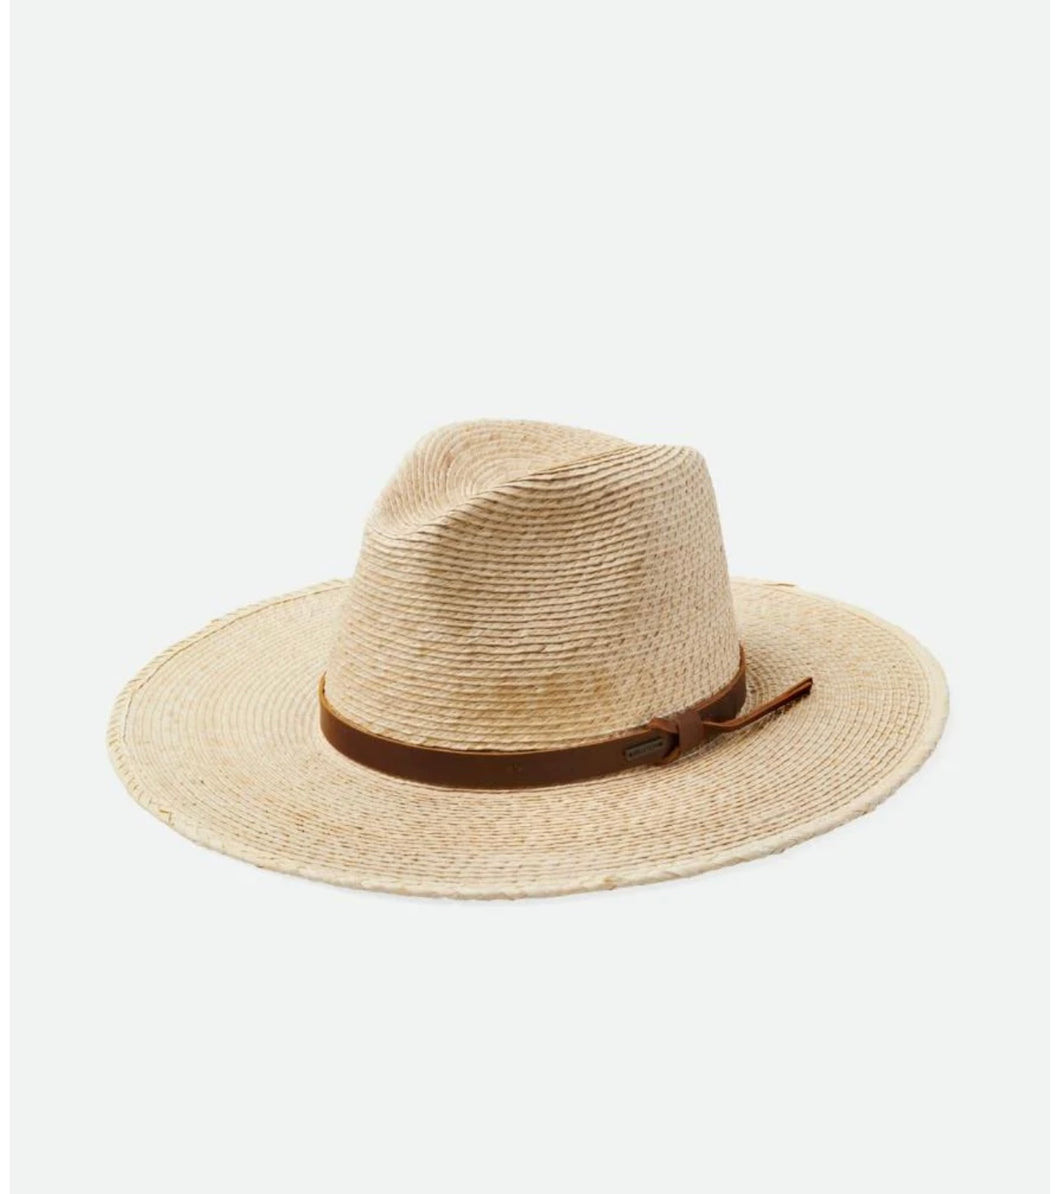 Field Proper Straw Hat - Natural/Brown